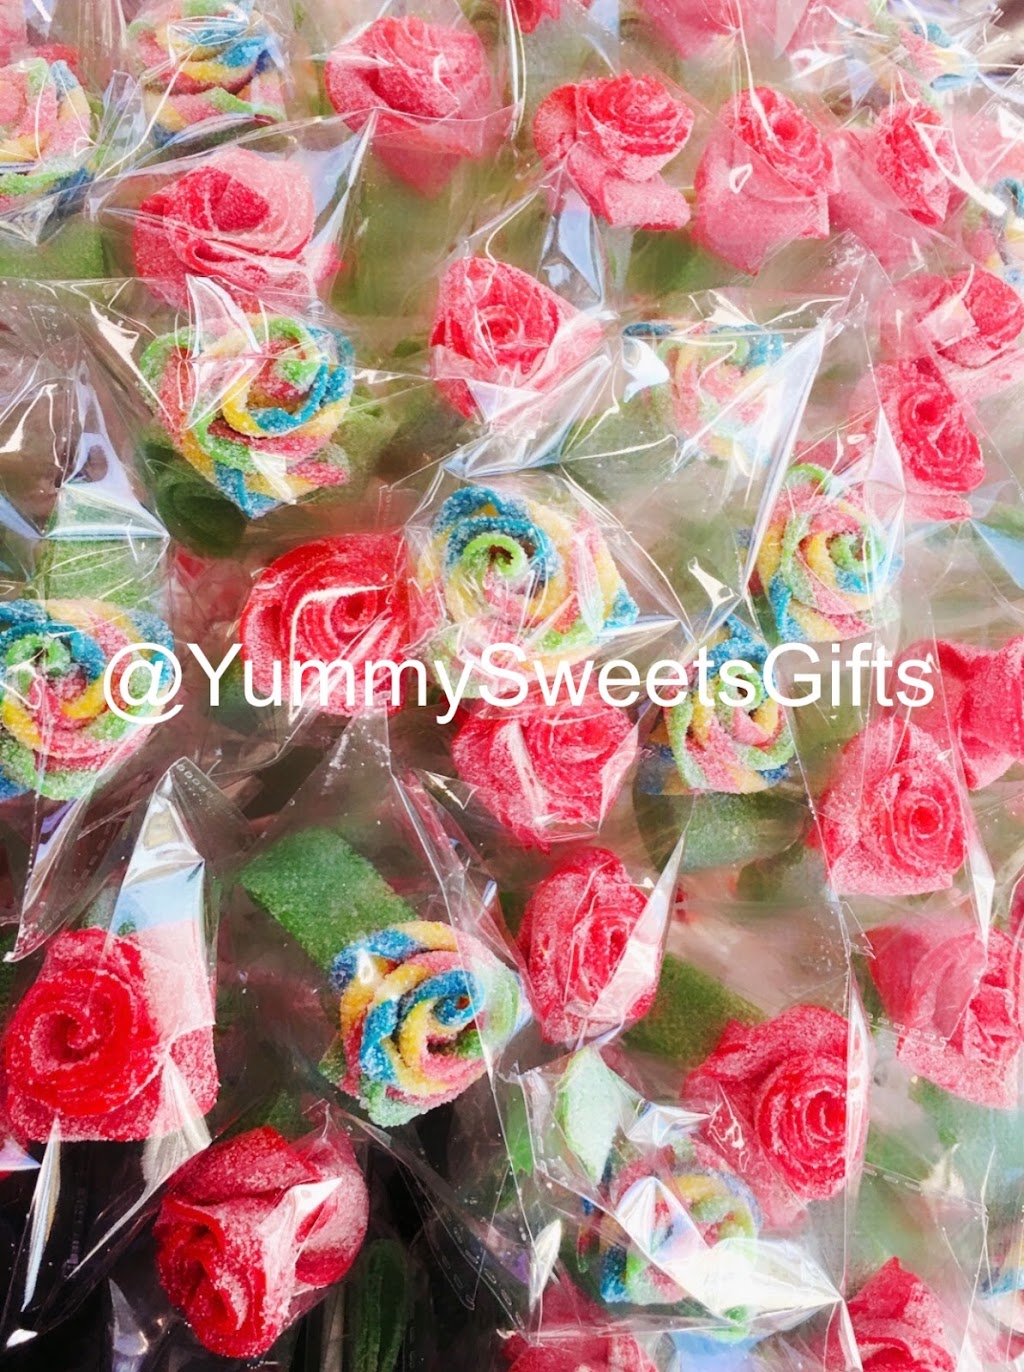 YummySweets&Gifts | Torrance, CA 90502, USA | Phone: (323) 419-8655